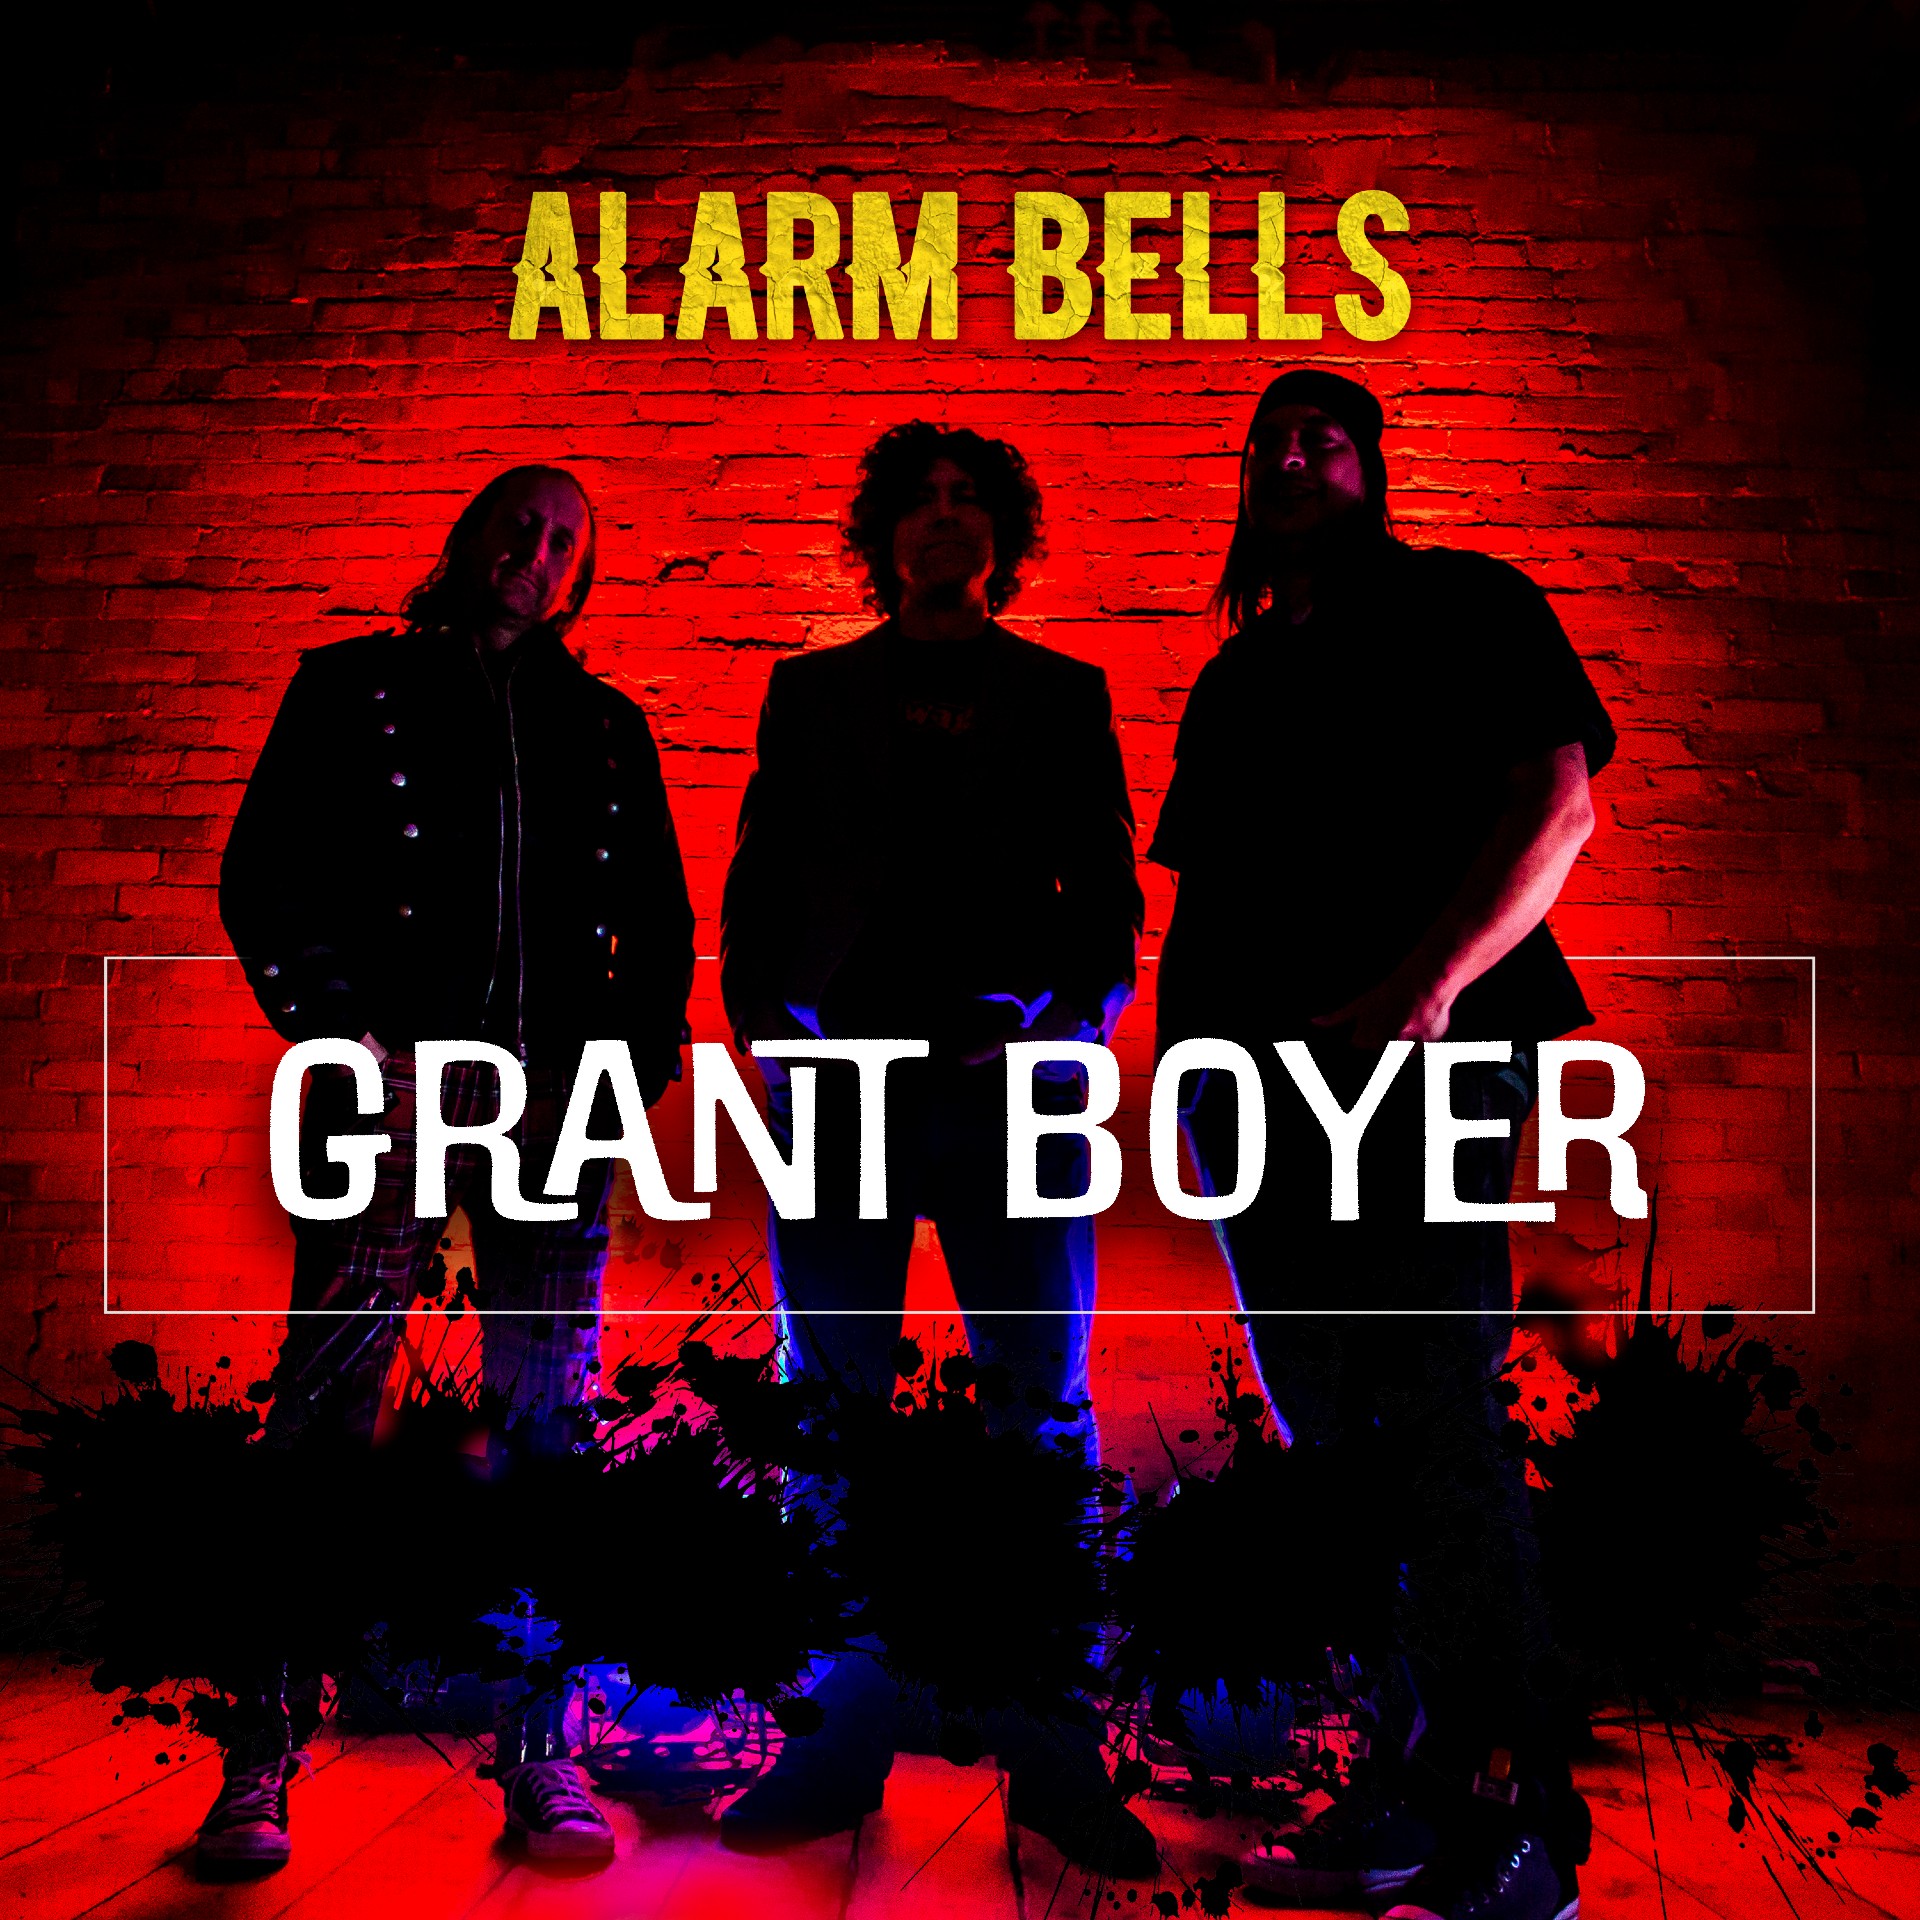 Grant Boyer ‘Alarm Bells’ EP album artwork